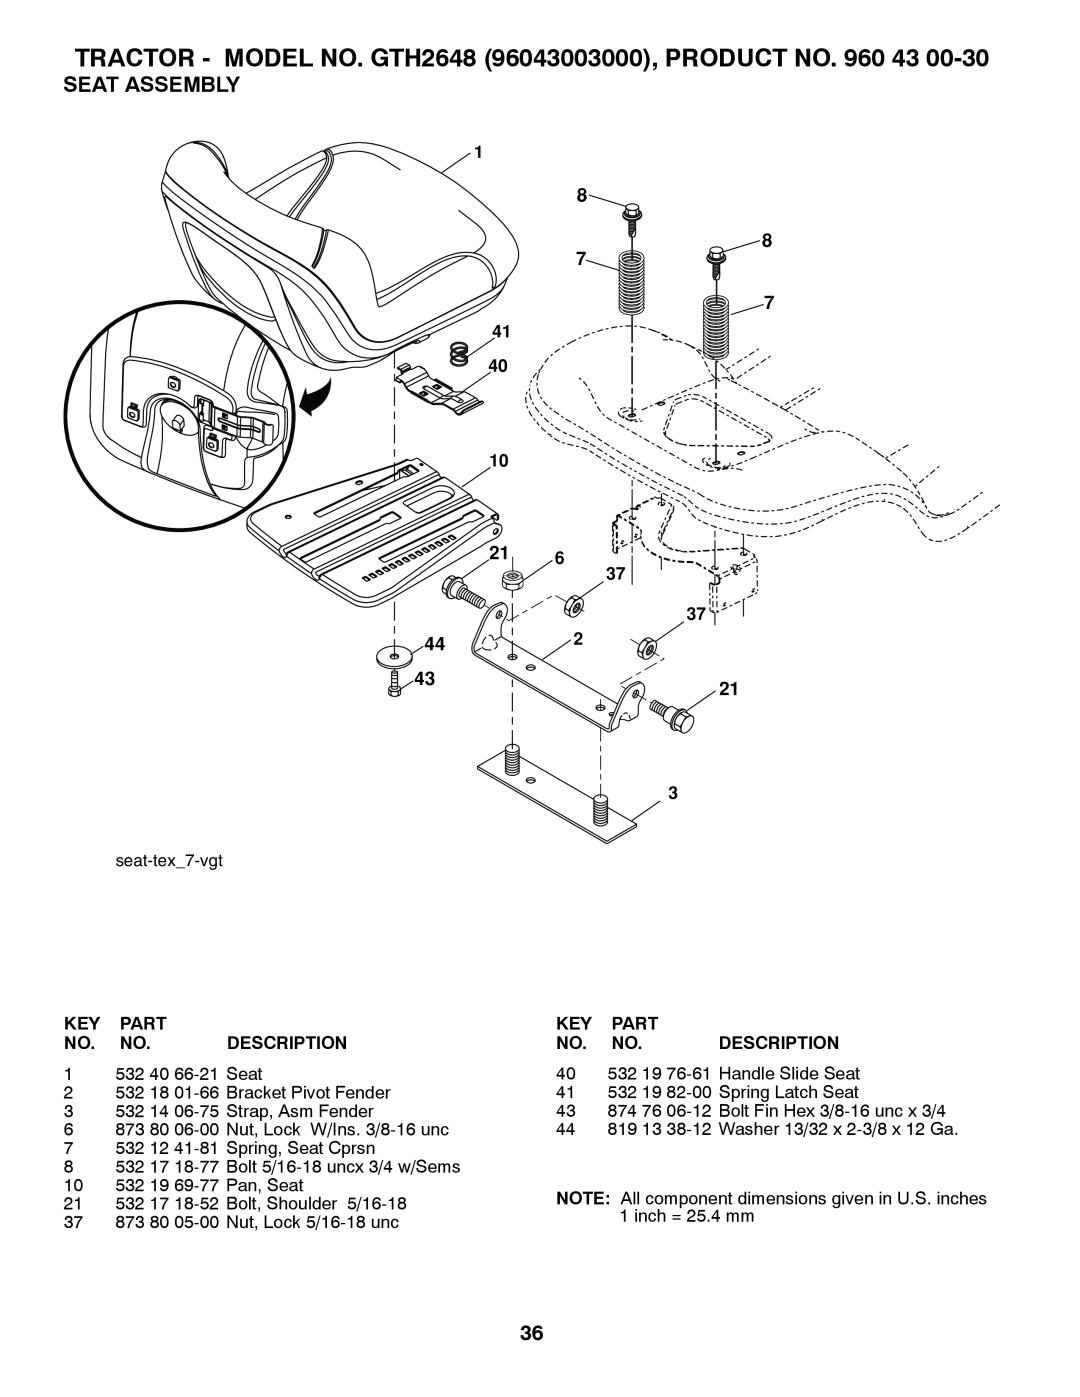 Husqvarna GTH2648 owner manual Seat Assembly, 8 8 7 7, 41 40 10 216, Key Part No. No. Description 